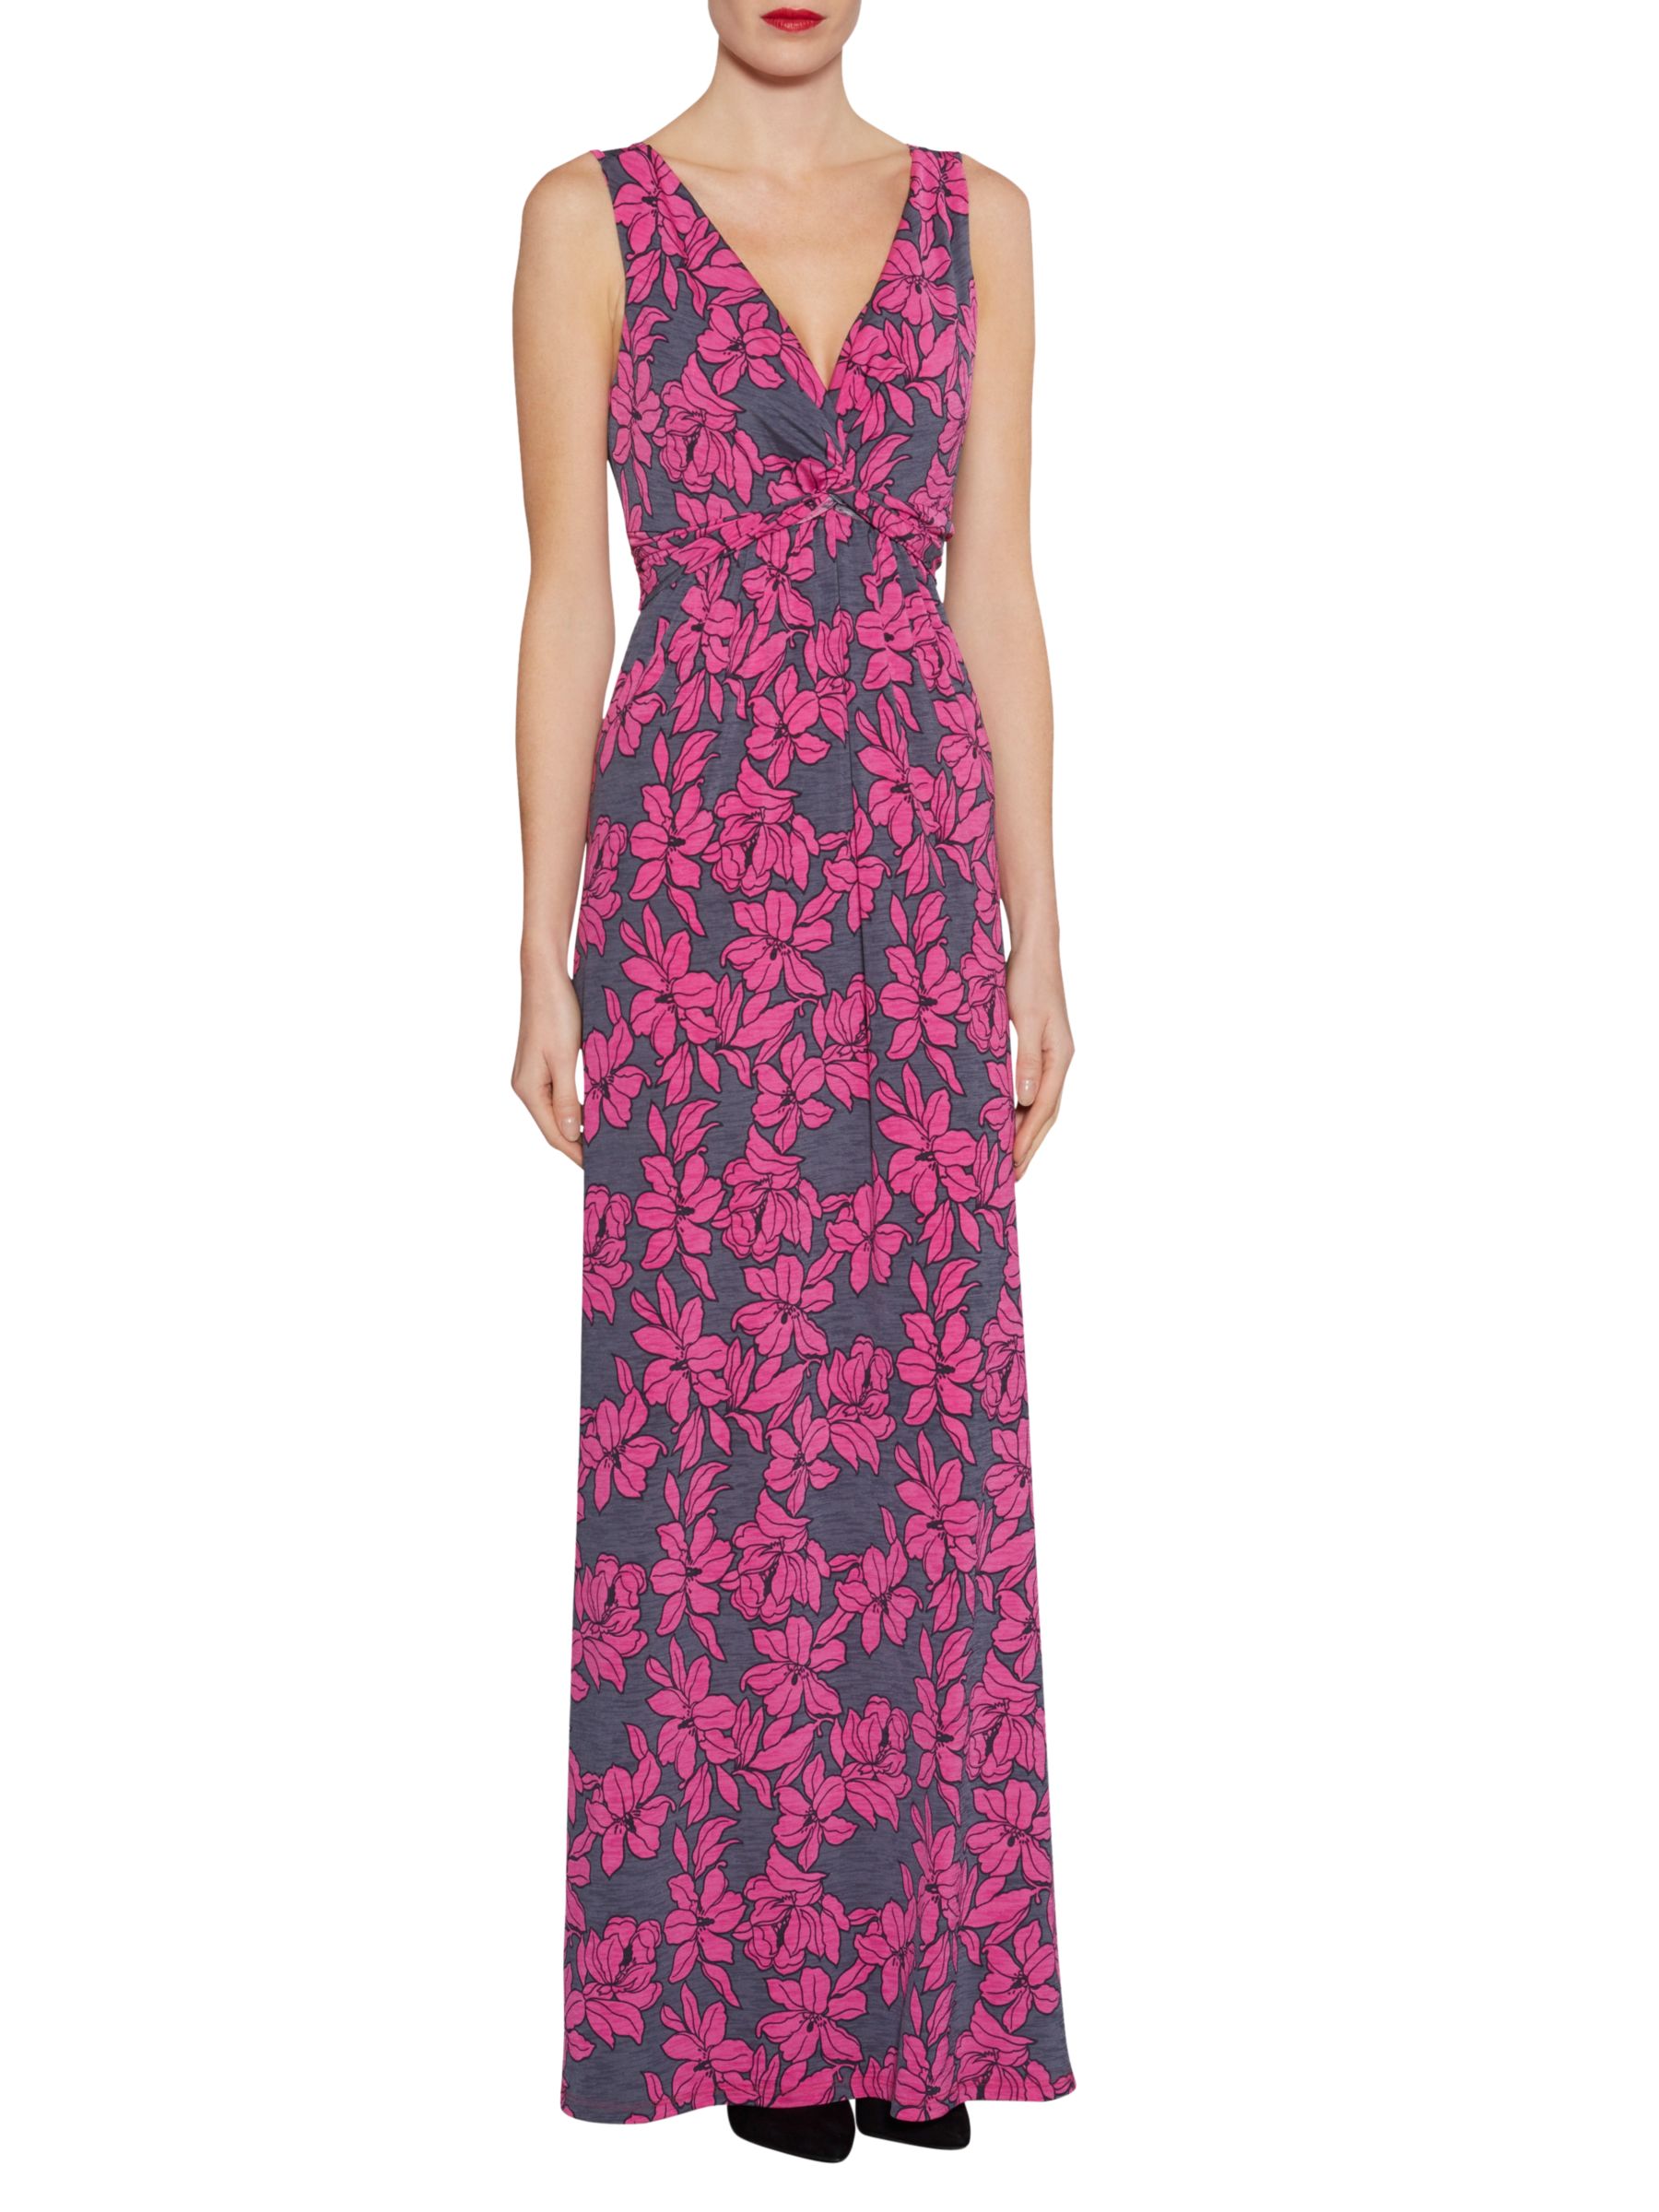 Gina Bacconi Floral Print Jersey Maxi Dress, Grey/Pink